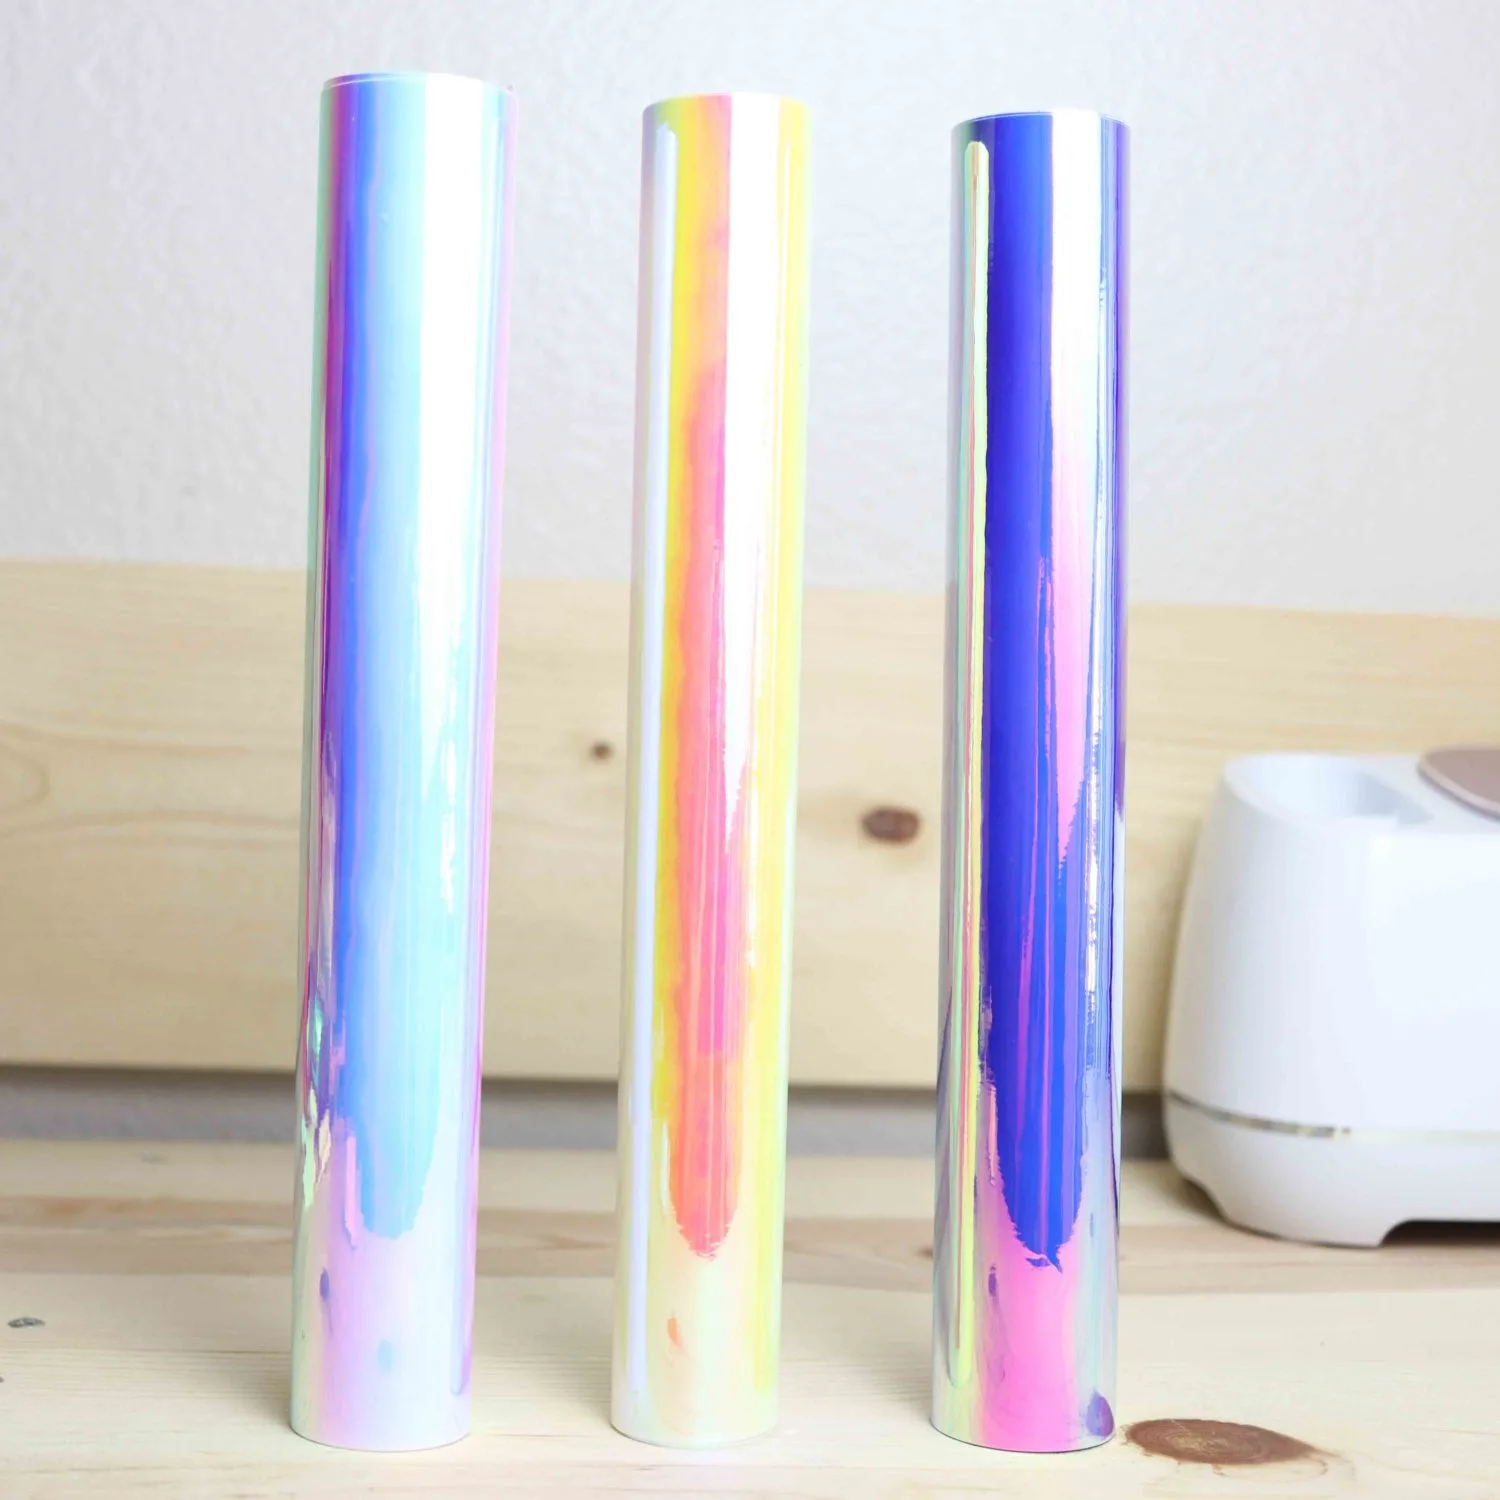 Holographic adhesive vinyl rolls